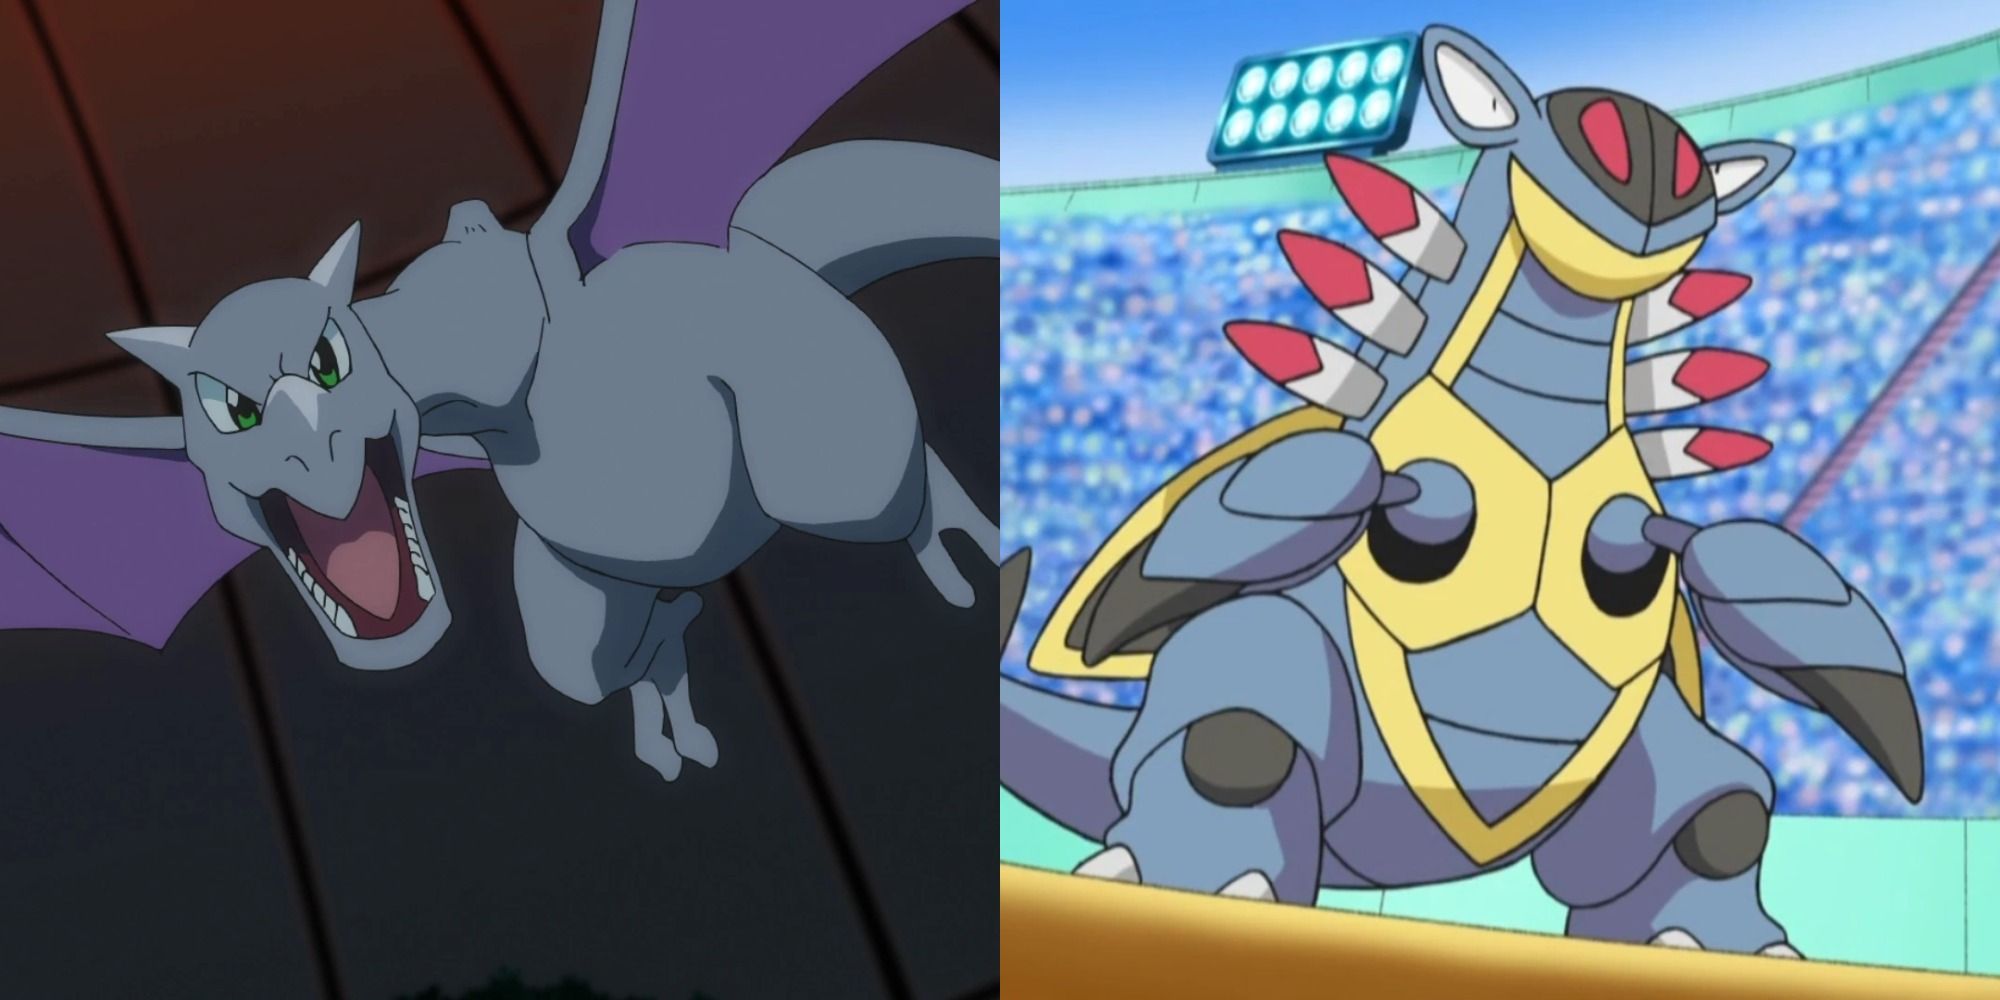 Split image showing Aerodactyl and Armaldo in the Pokémon Anime.